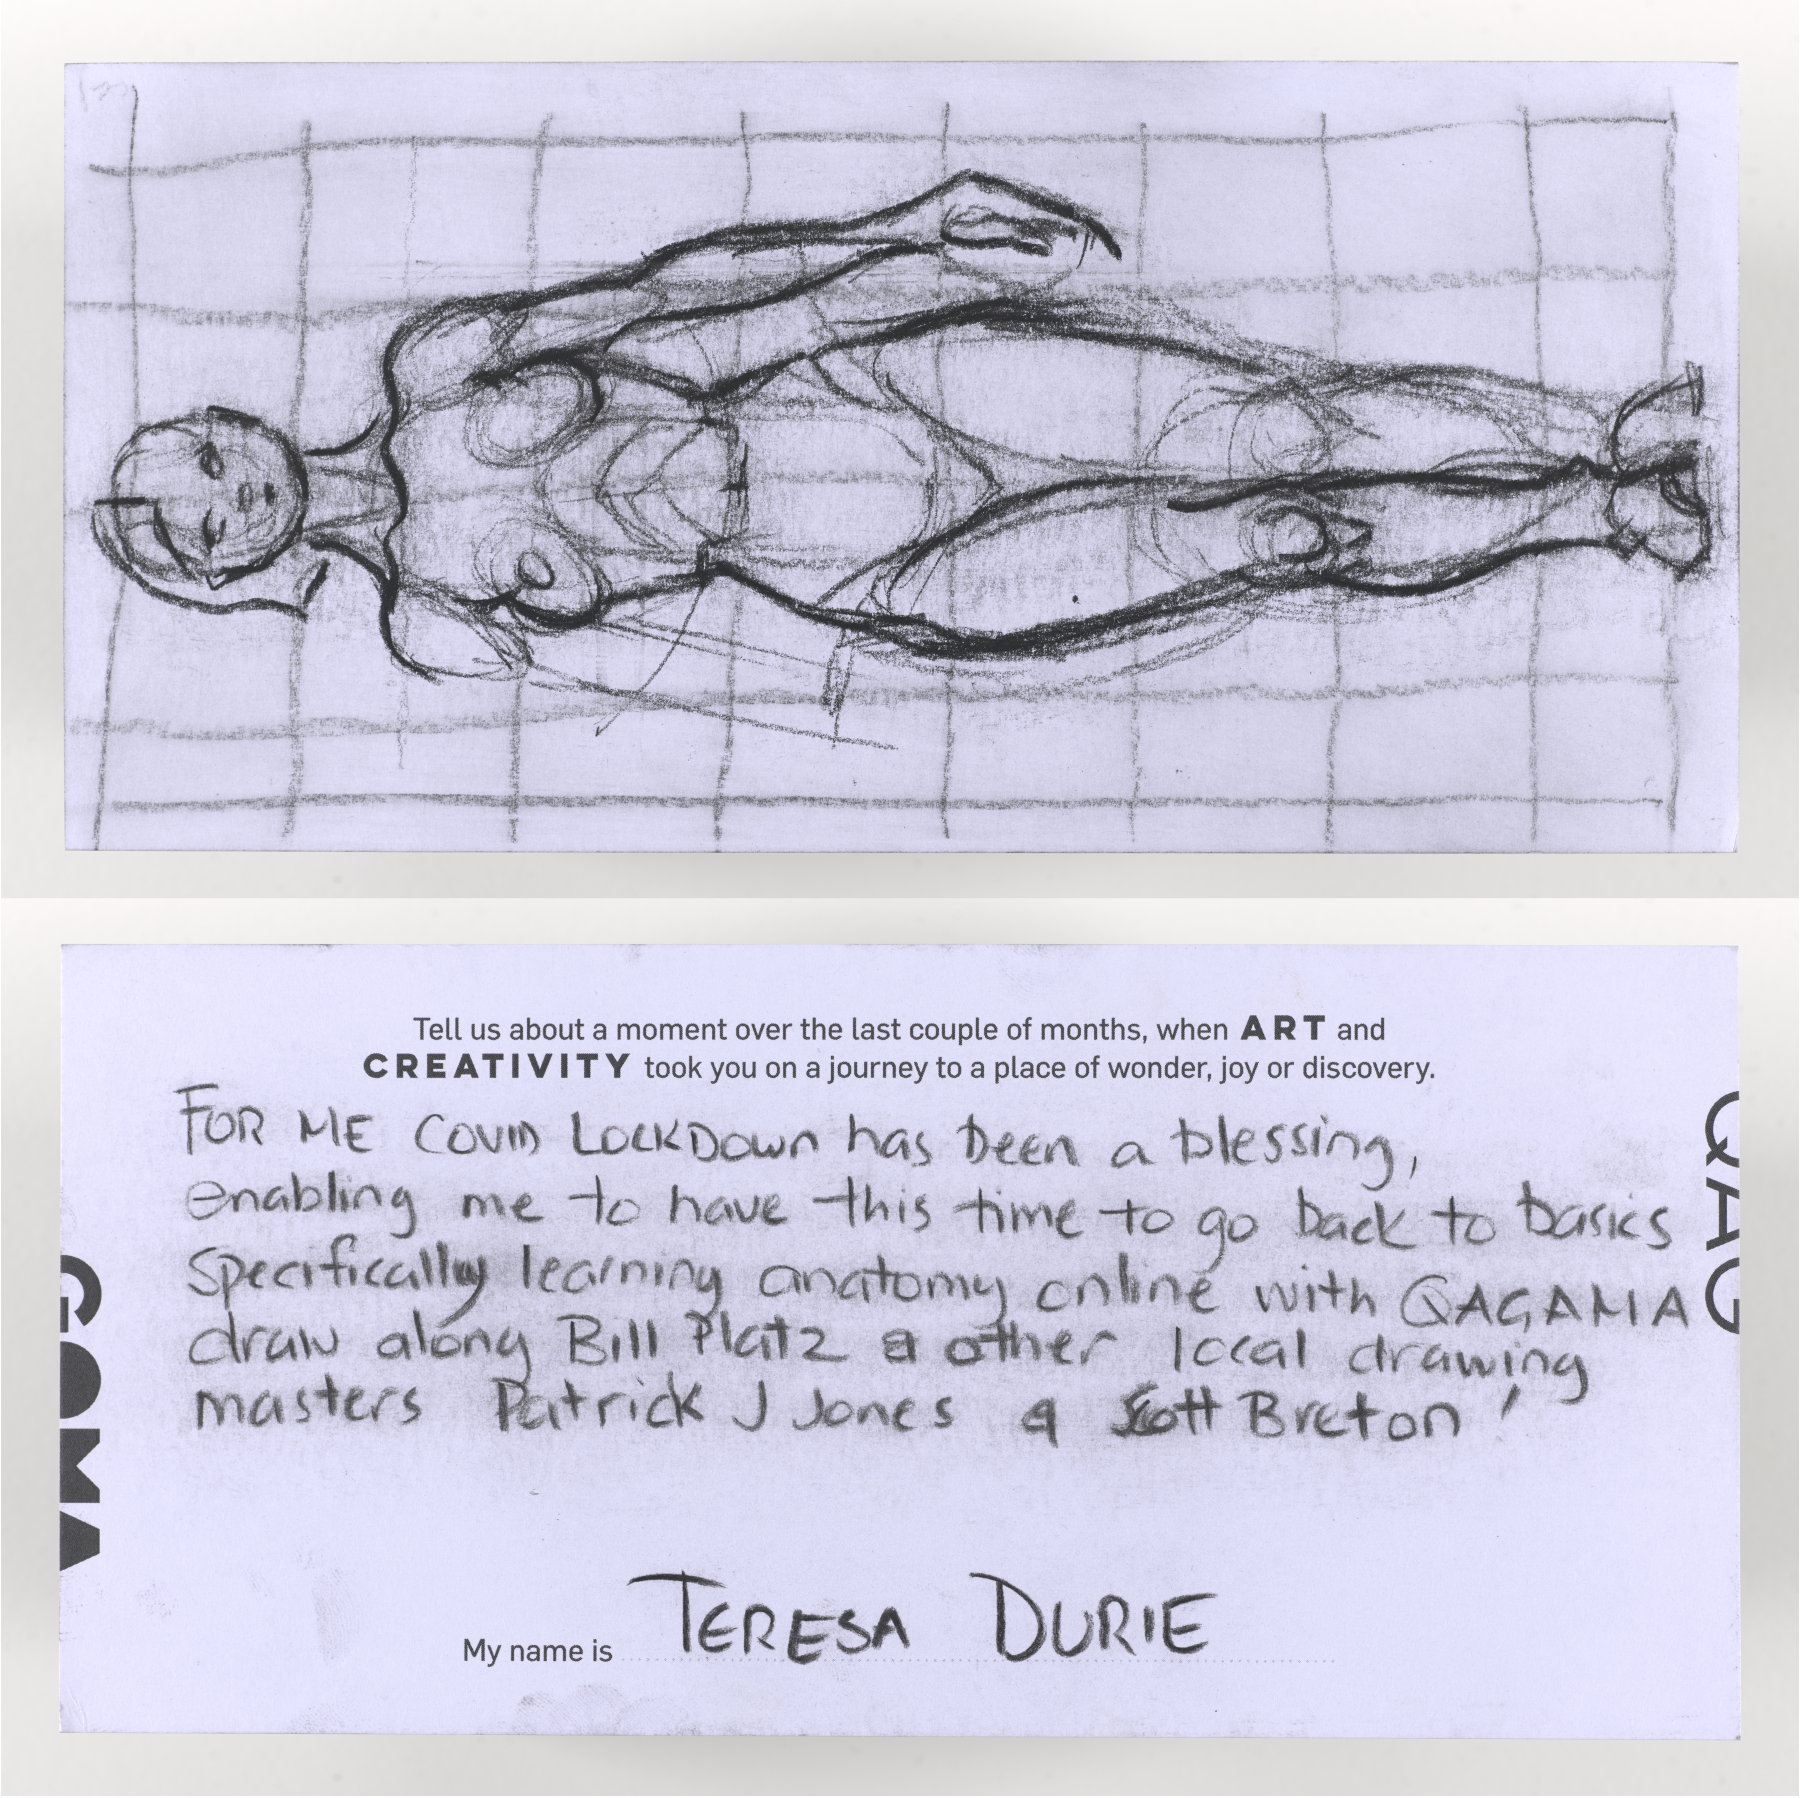 Generated image of the artwork: Teresa Durie